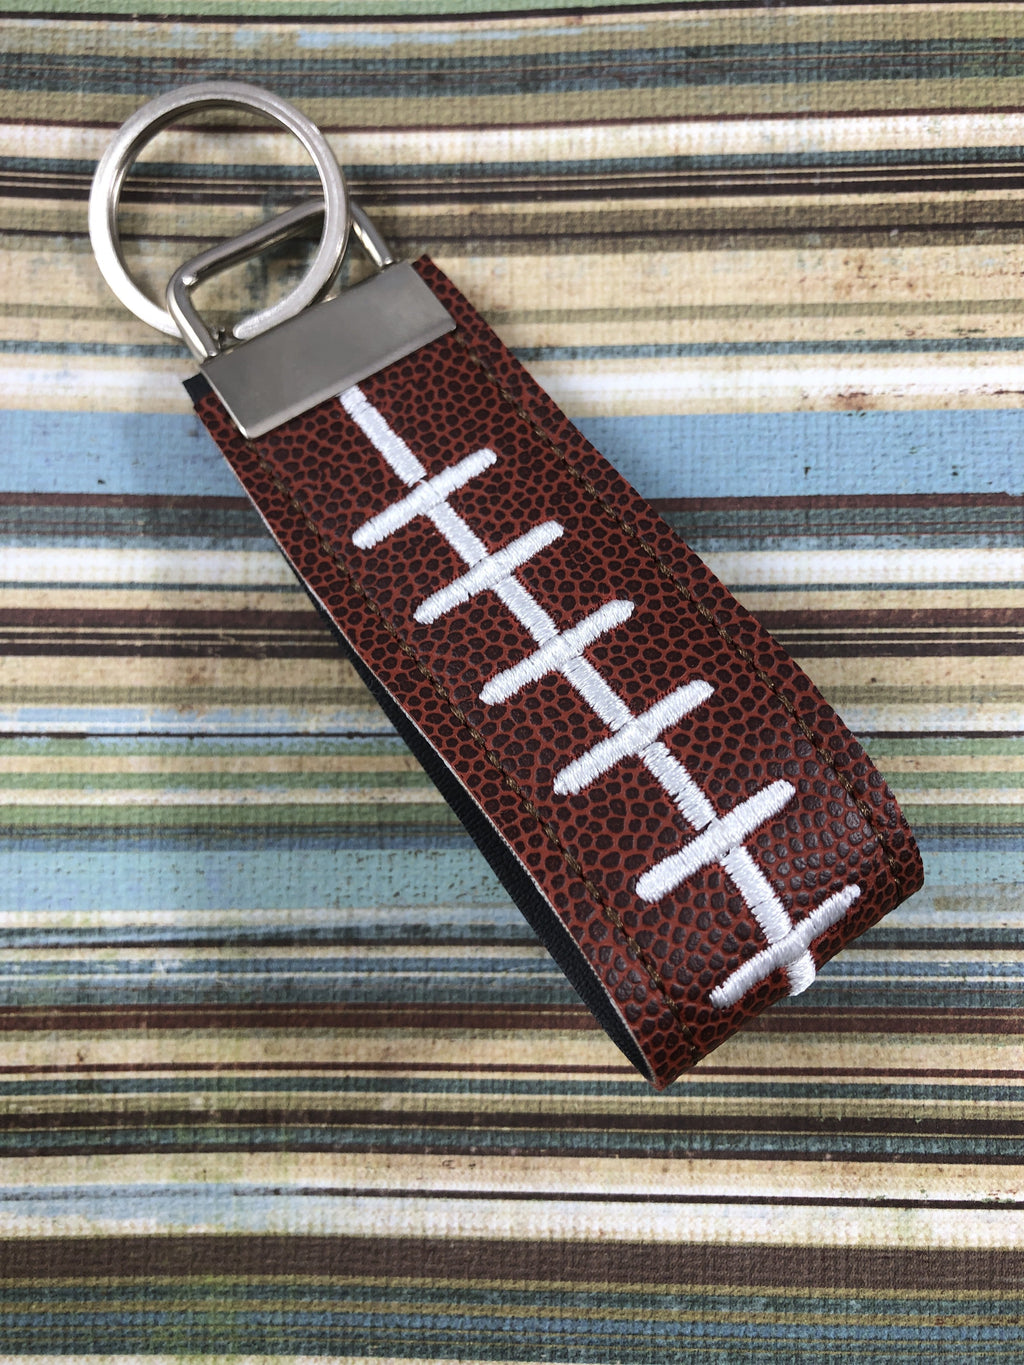 DBB Football Stitching Wristlet Keyfob or Decorative Strap